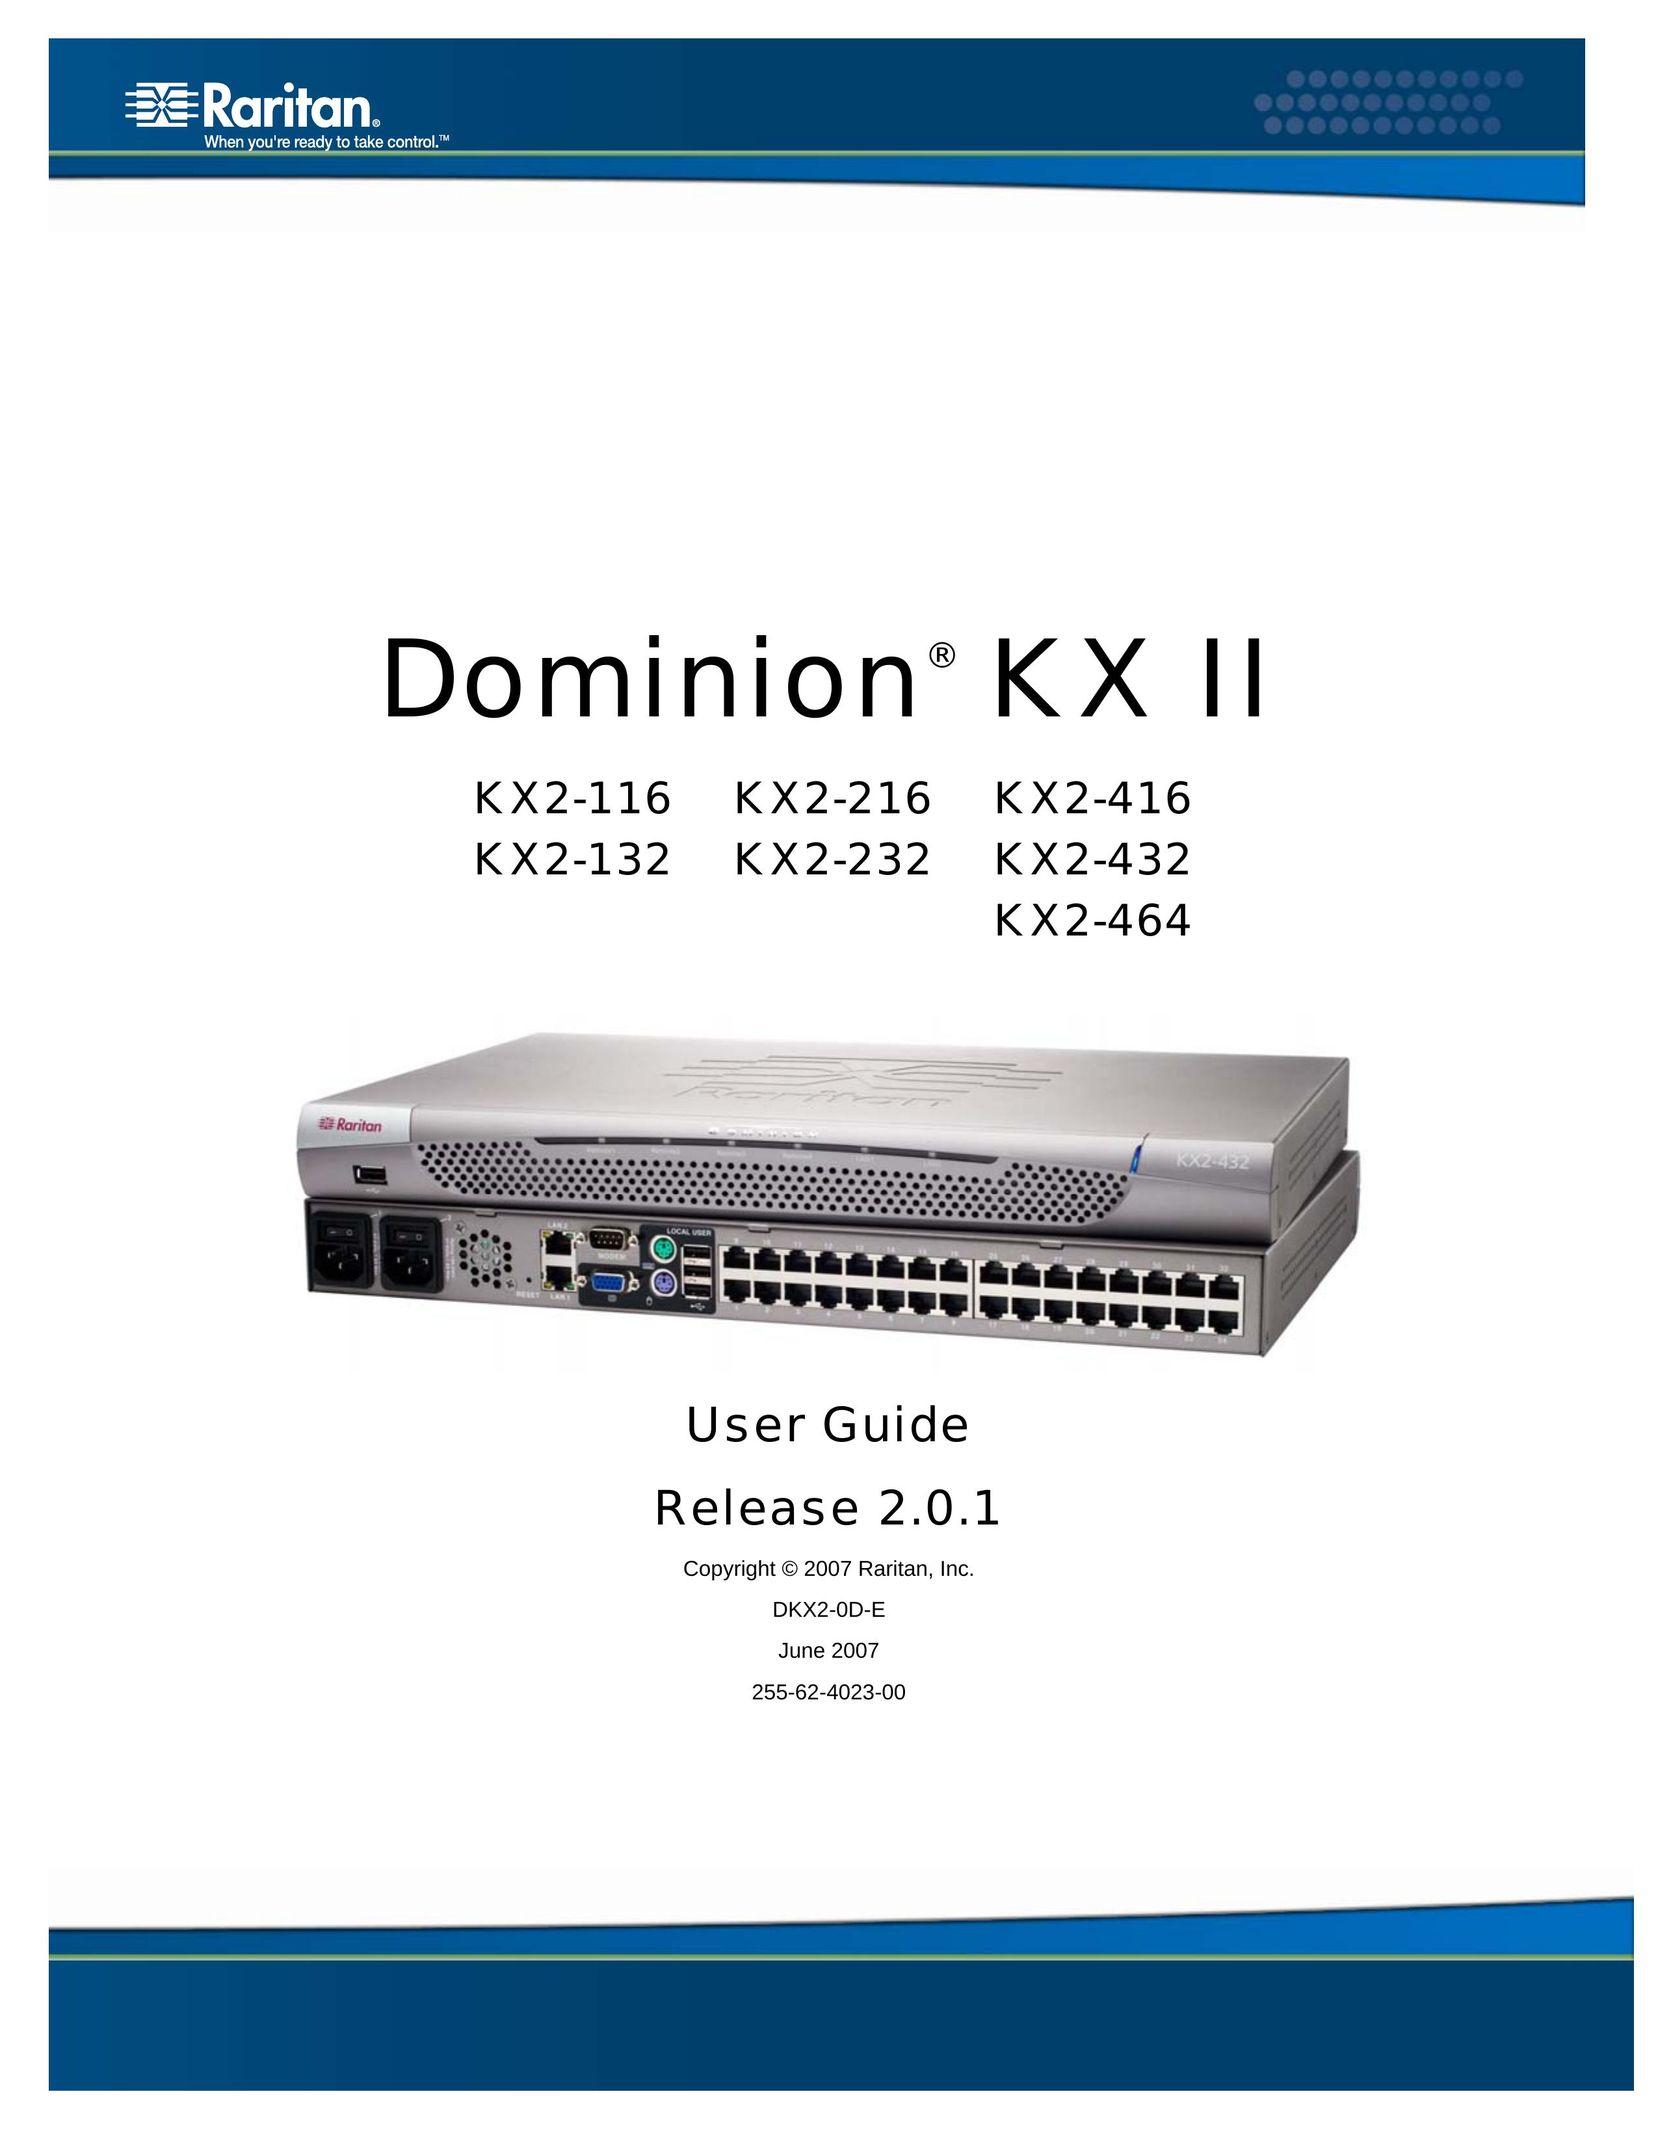 Raritan Computer KX2-132 Network Router User Manual